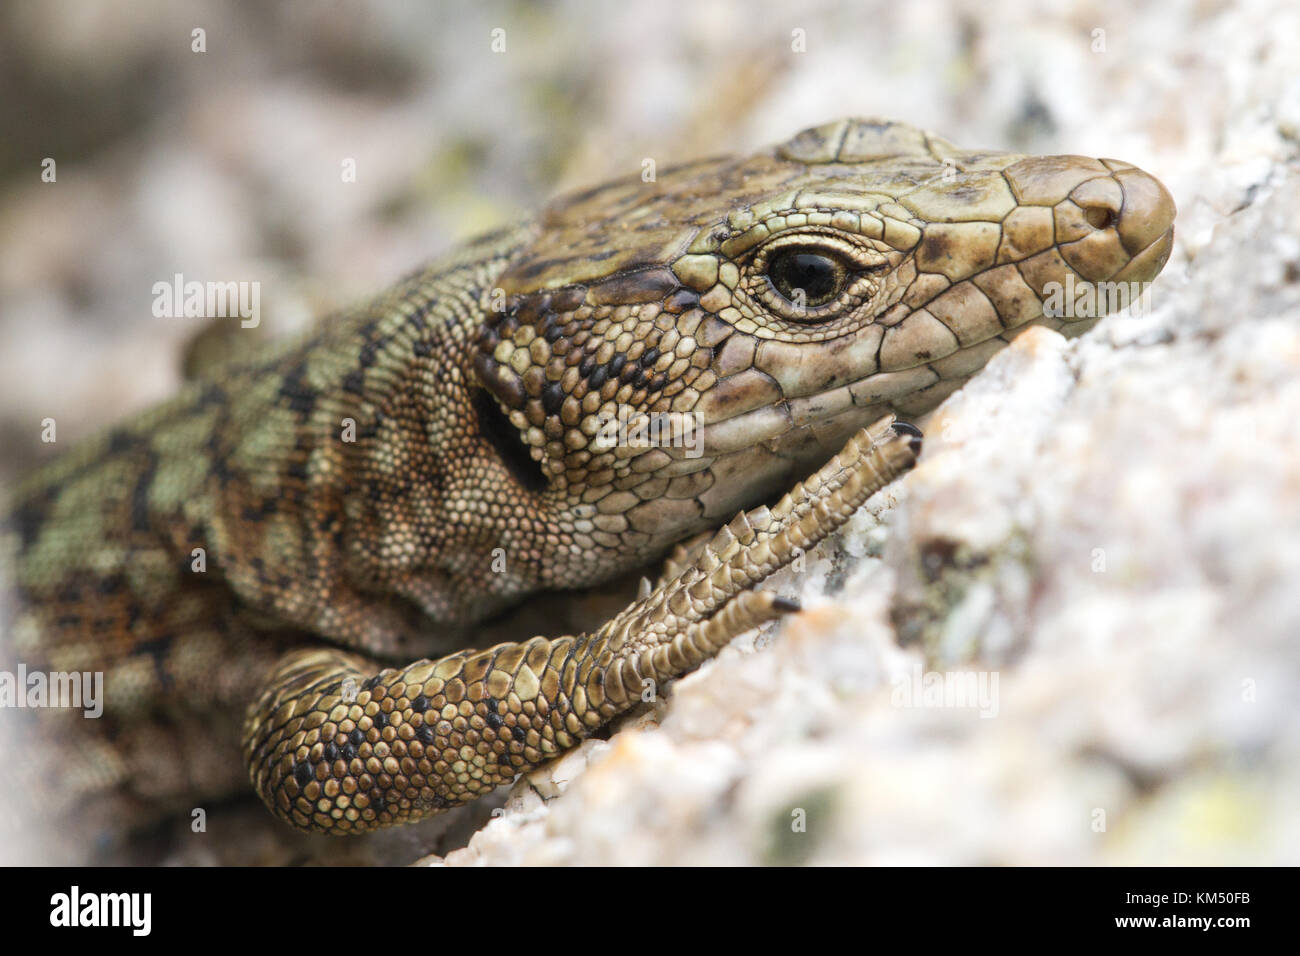 Archeolacerta bedriagae, an endemic mountain lizard of Corsica and Sardinia islands, Mediterranean Sea, Europe. Stock Photo